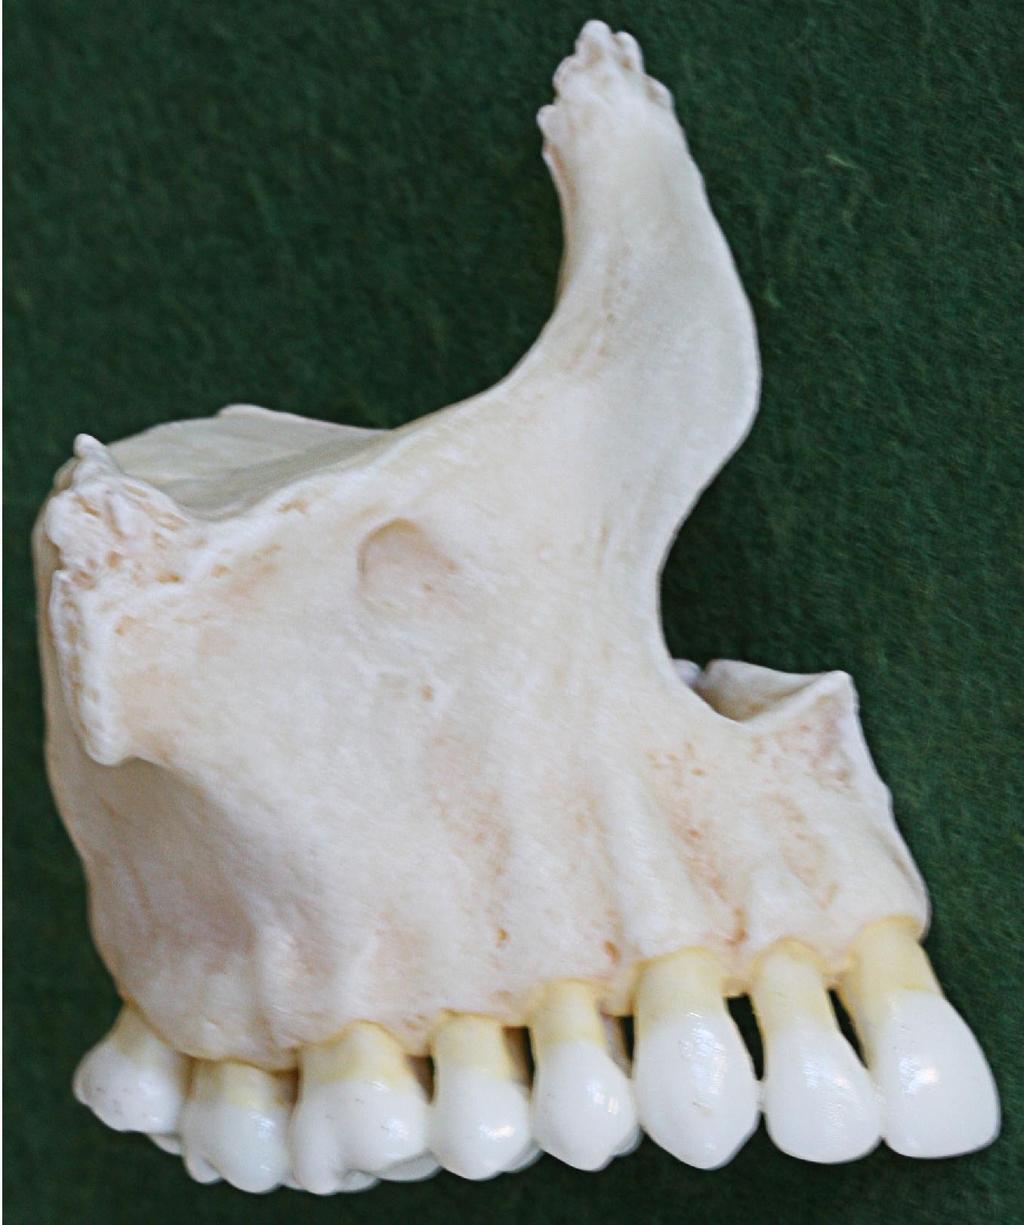 maxilla Facies anterior 1. Fossa canina 2. Foramen infraorbitale 3. Margo infraorbitalis 4. Incisura nasalis apertura piriformis 5.